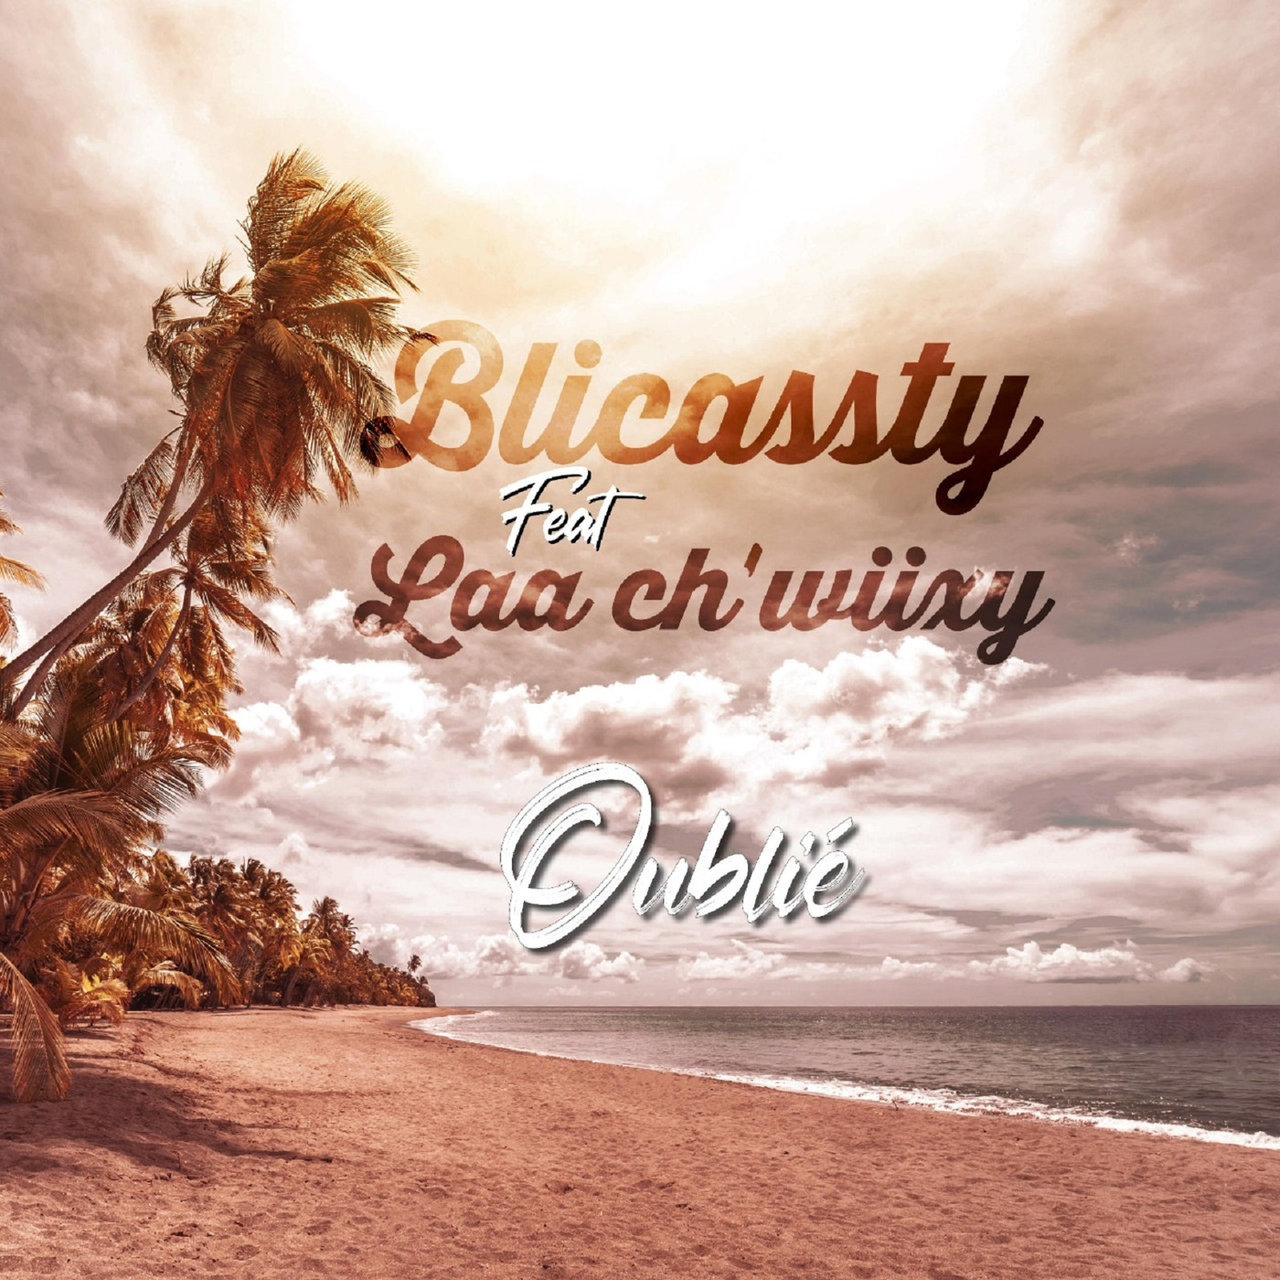 Blicassty - Oublié (ft. Laa Ch'wiixy) (Cover)